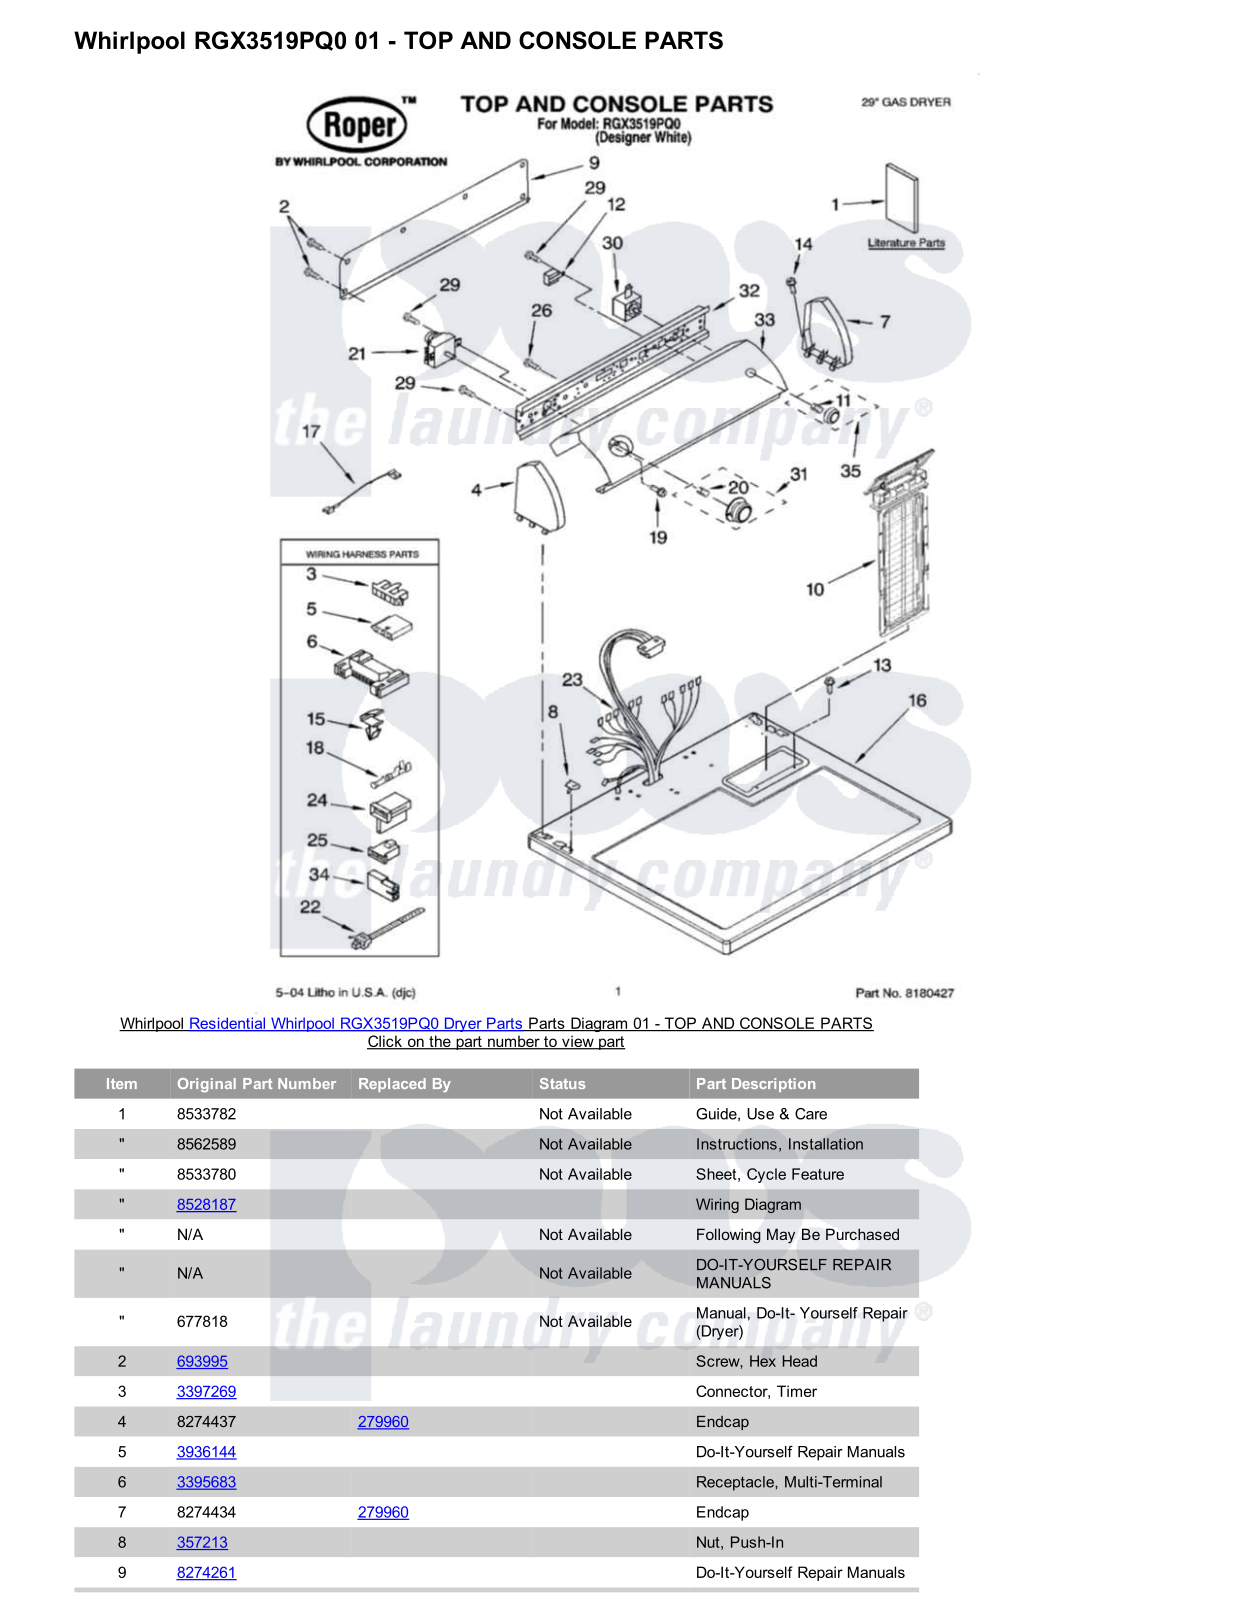 Whirlpool RGX3519PQ0 Parts Diagram